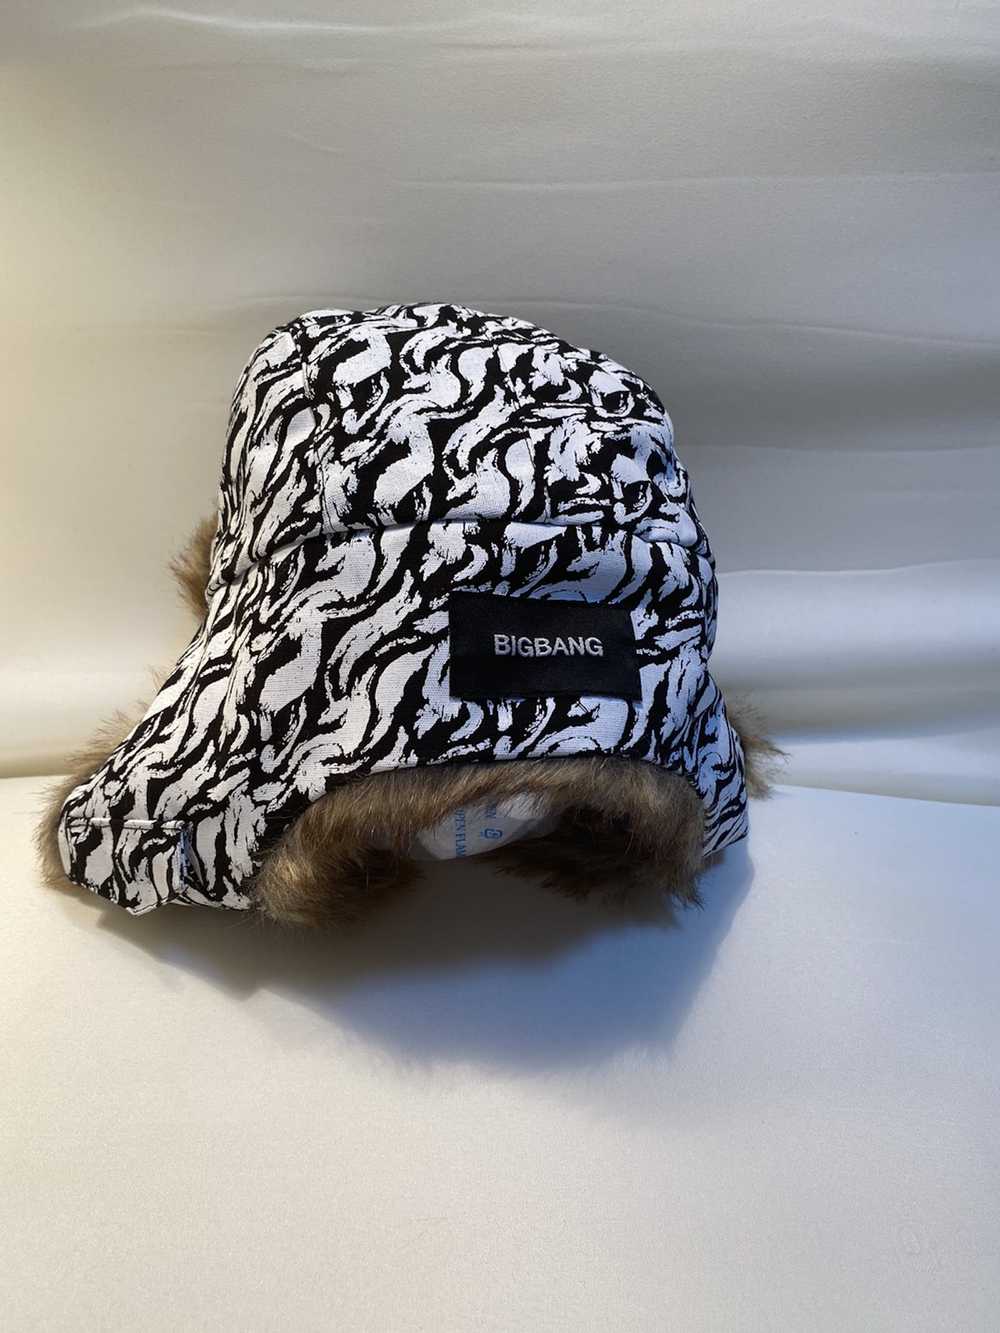 Japanese Brand Big bang winter hat - image 4